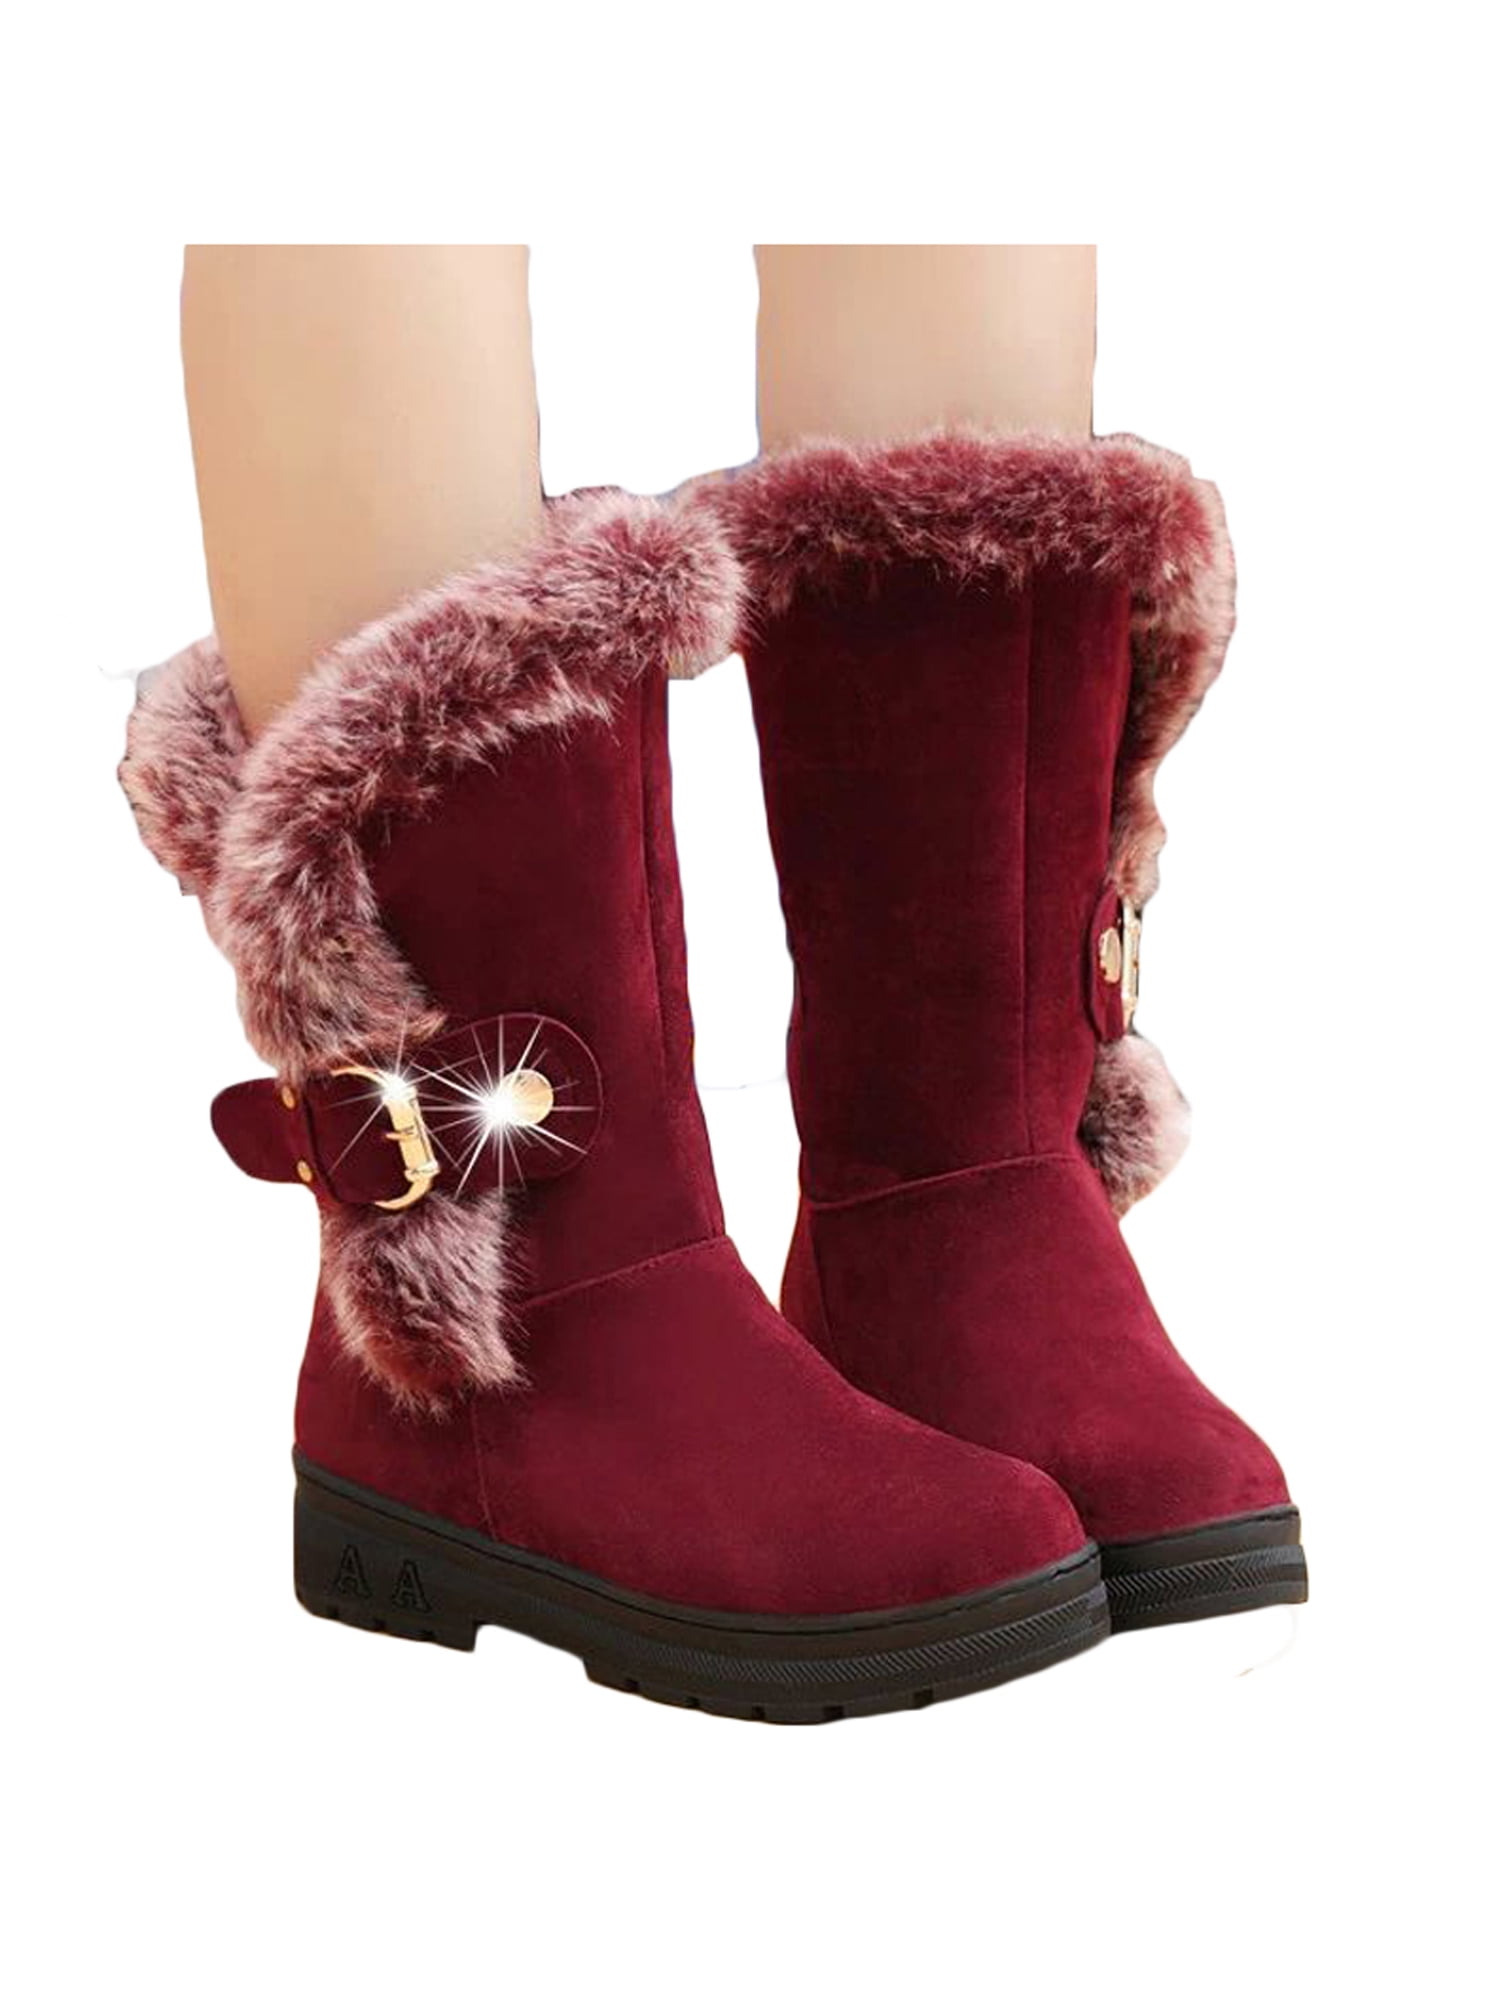 Womens Mid Calf Flat Boots Outdoor Winter Warm Faux Fur Snow Booties Biker Shoes 